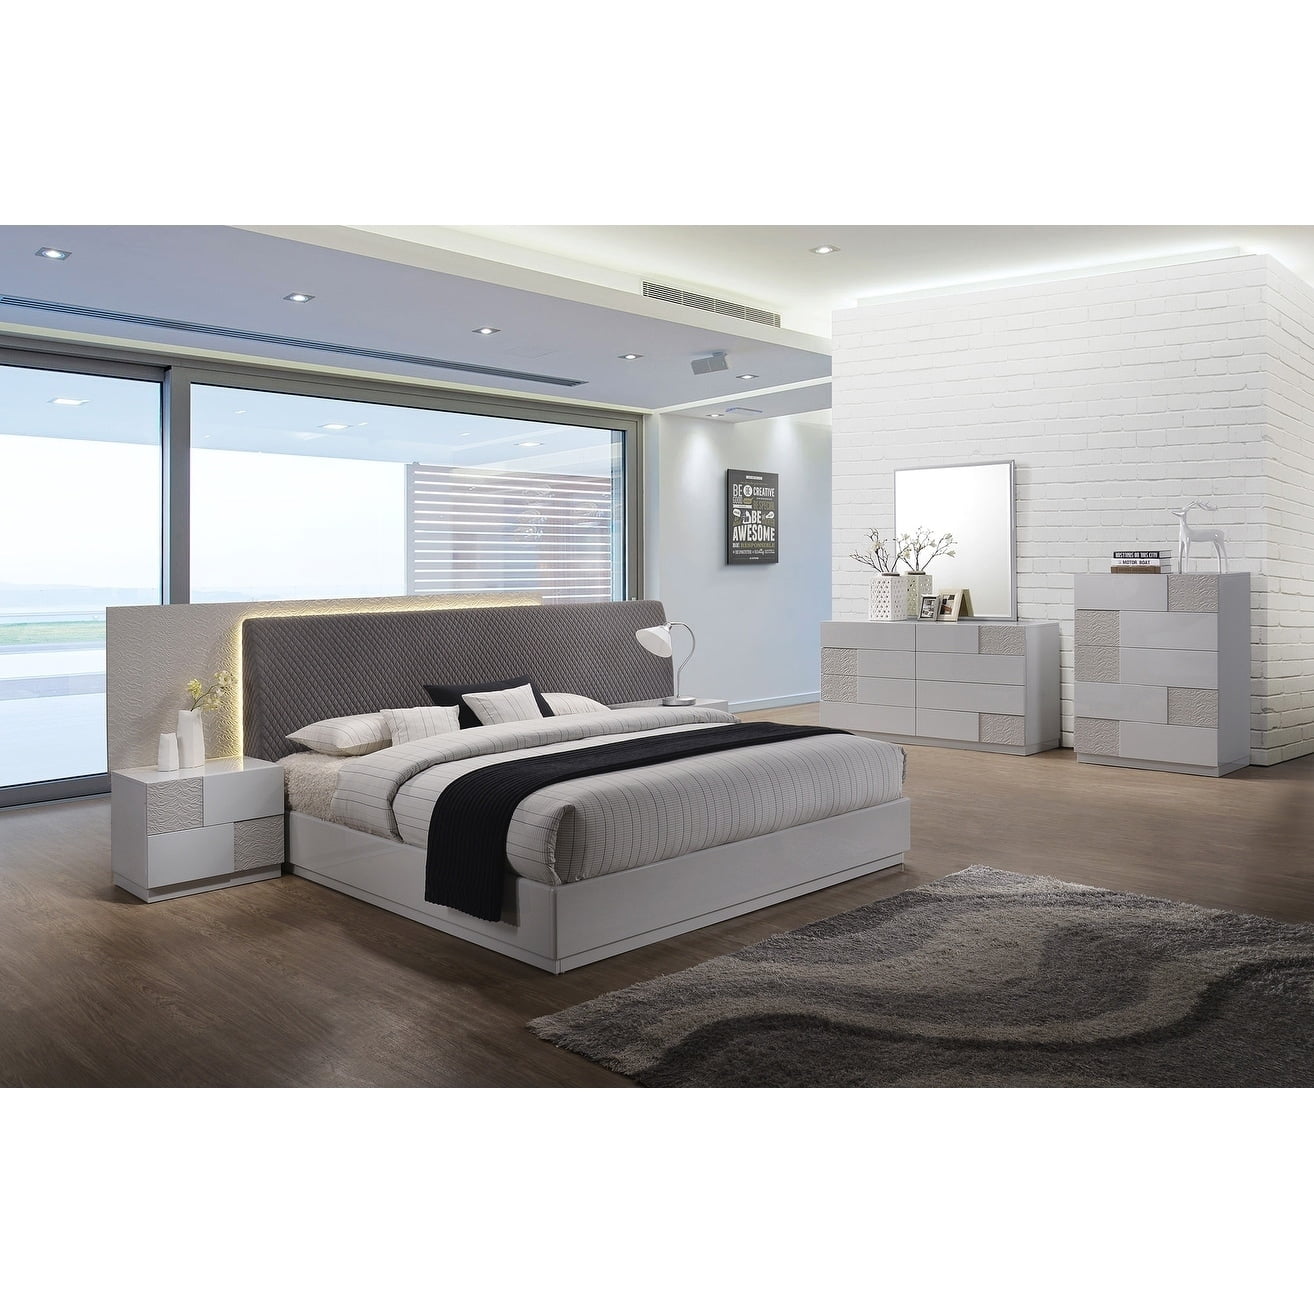 Best Master Furniture Naple Silver Line 5 Pieces Bedroom ...